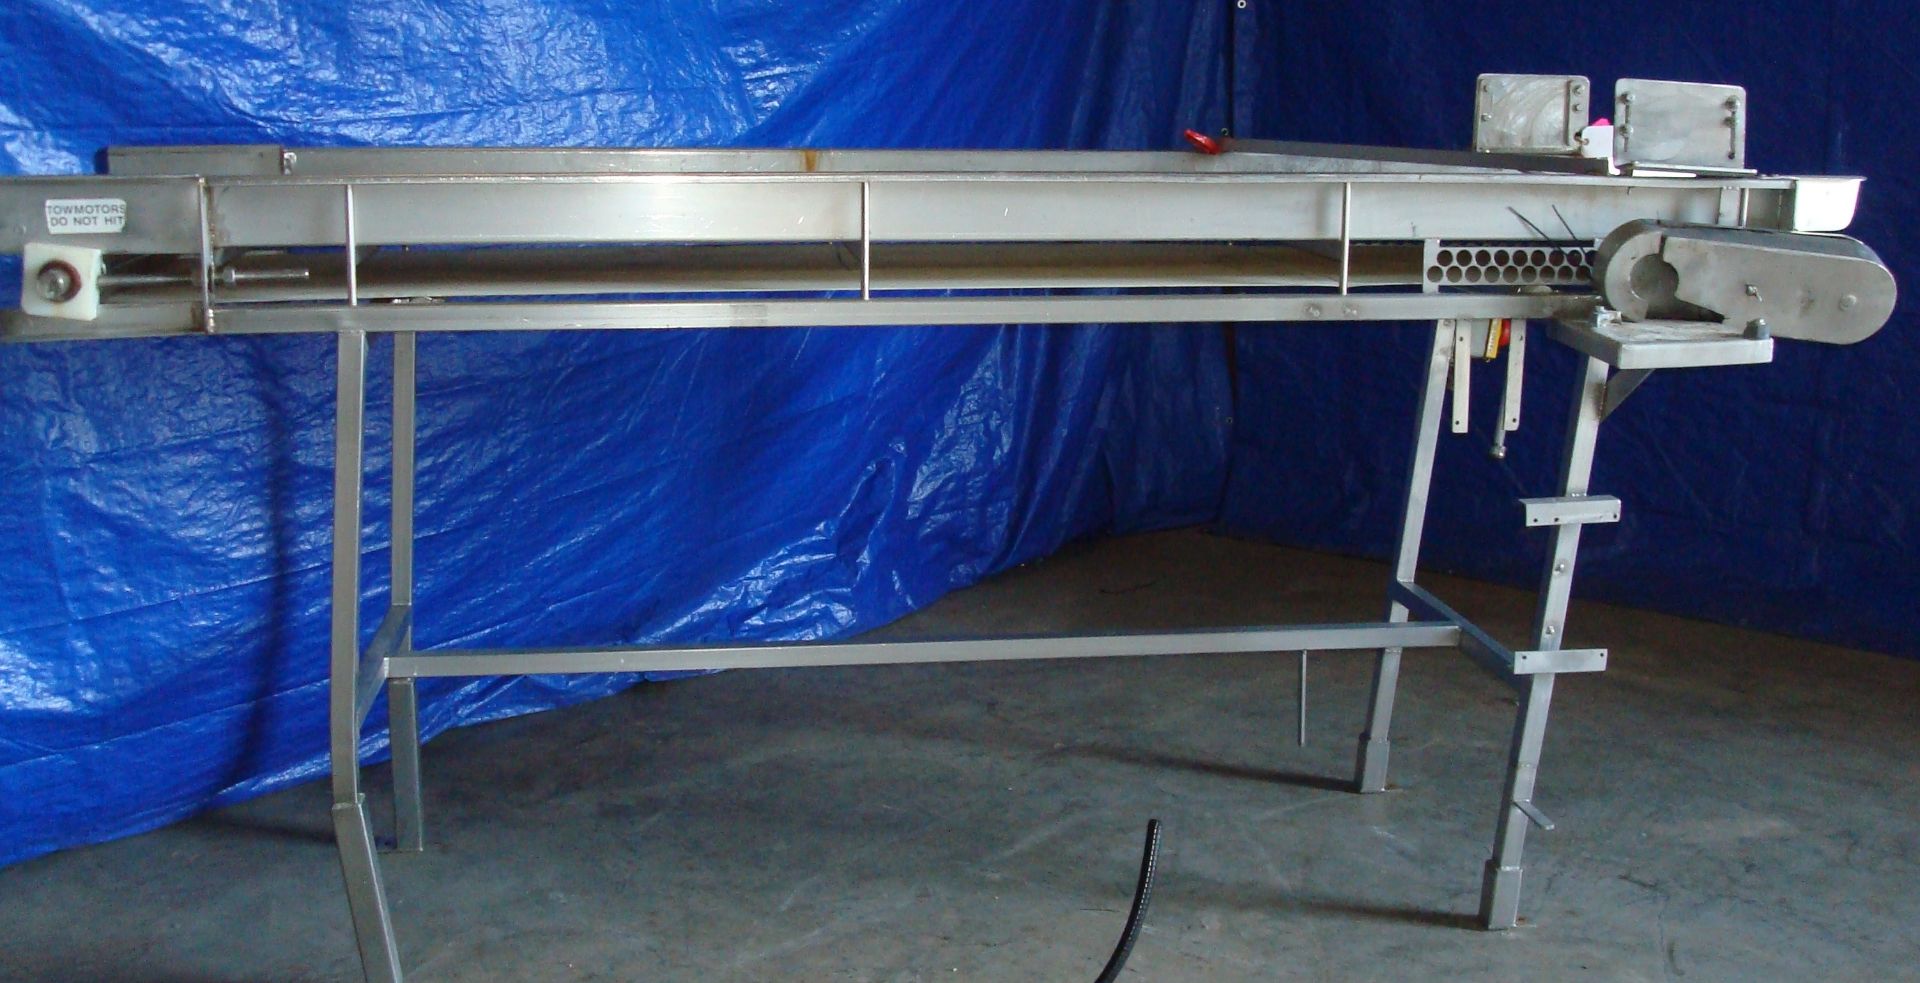 24" wide x 113" long stainless steel belt conveyor